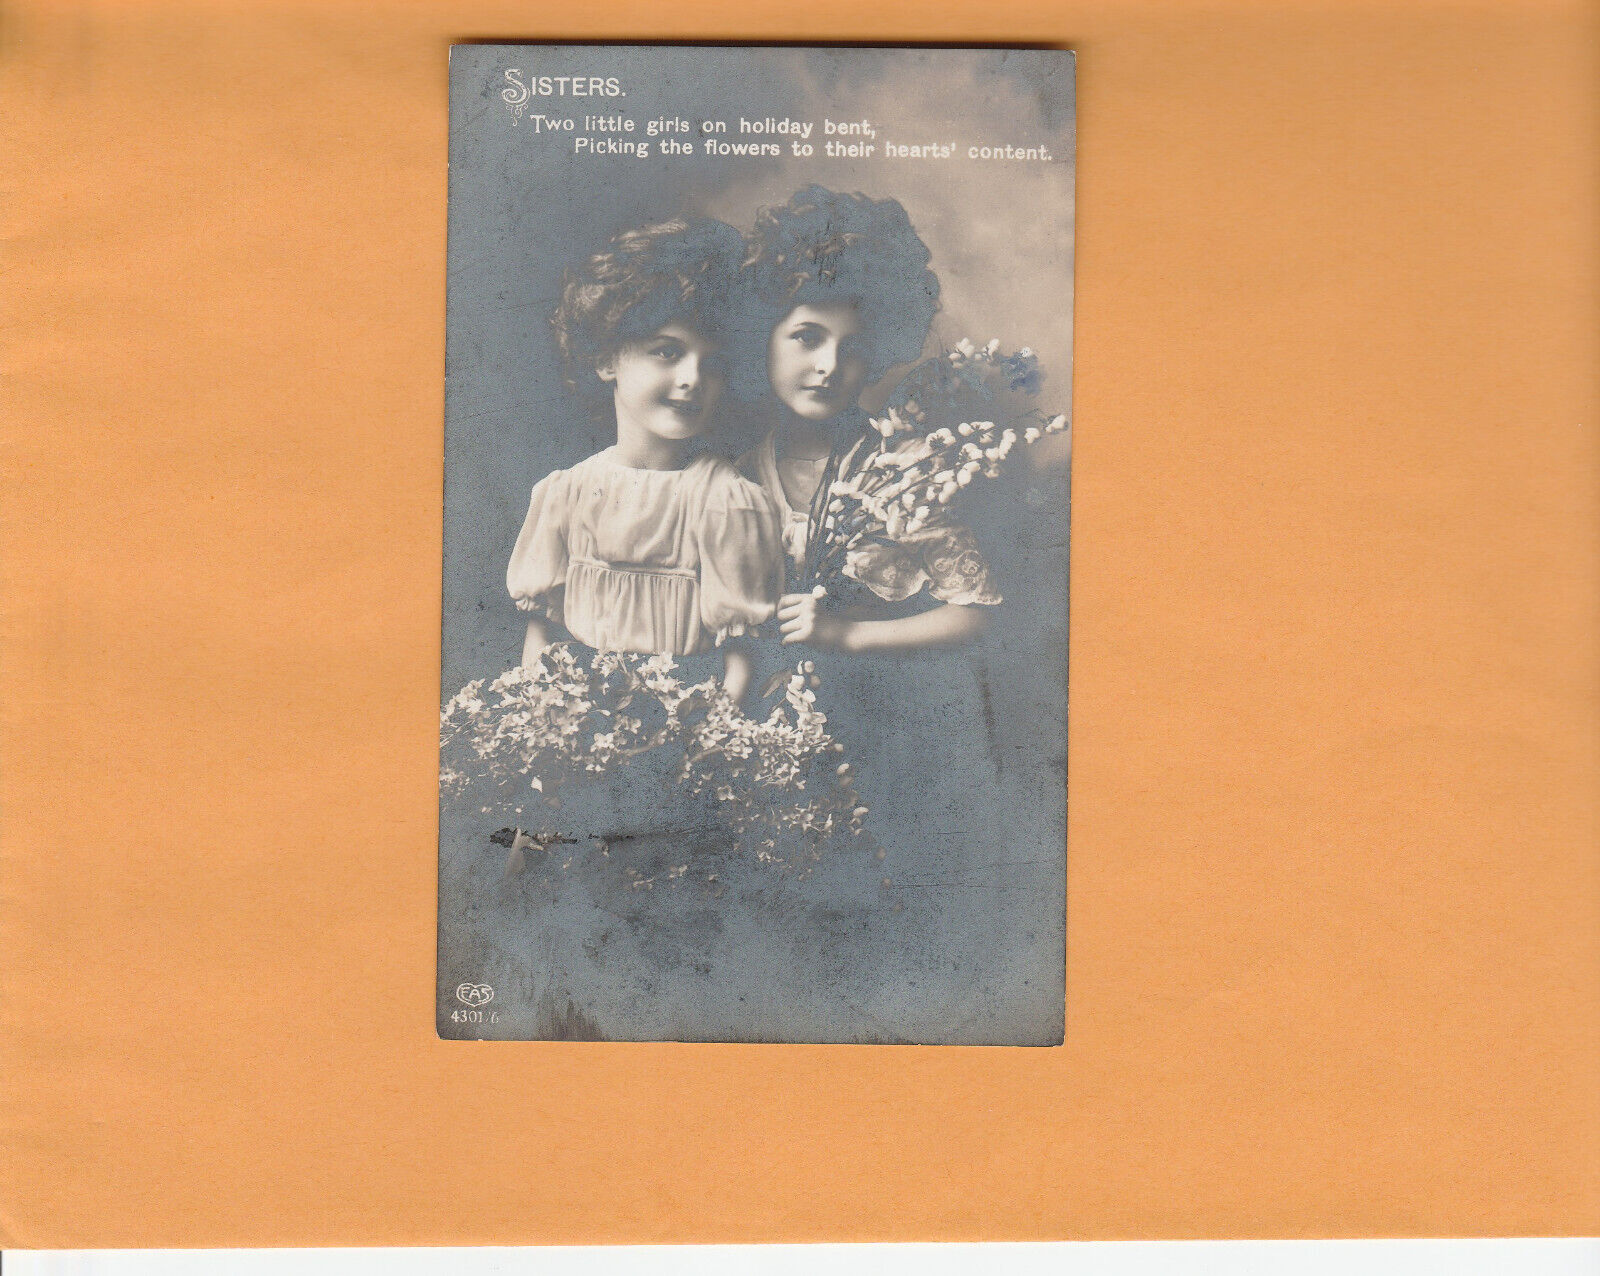 vintage 1913 real photo rppc postcard 